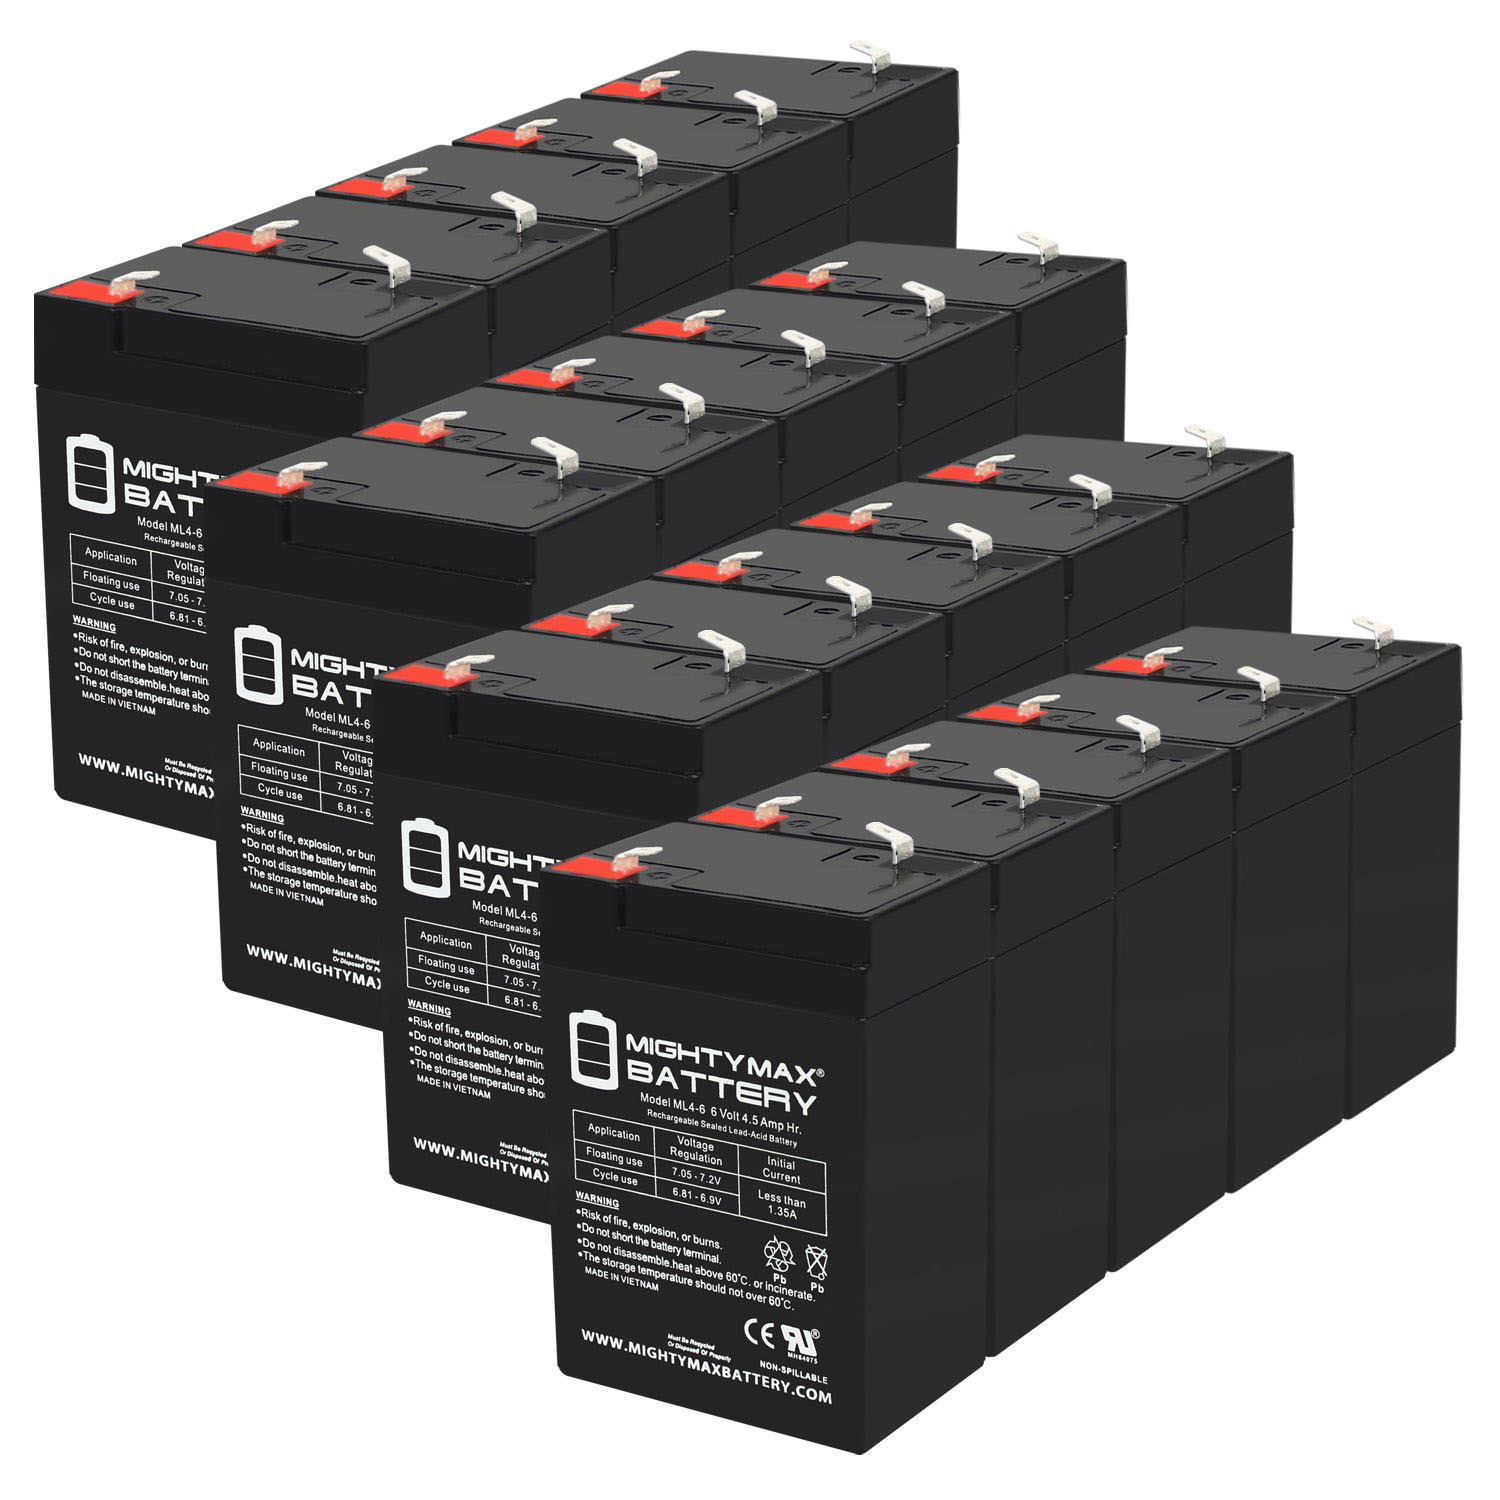 6V 4.5AH SLA Replacement Battery for Edwards 1620 - 20 Pack